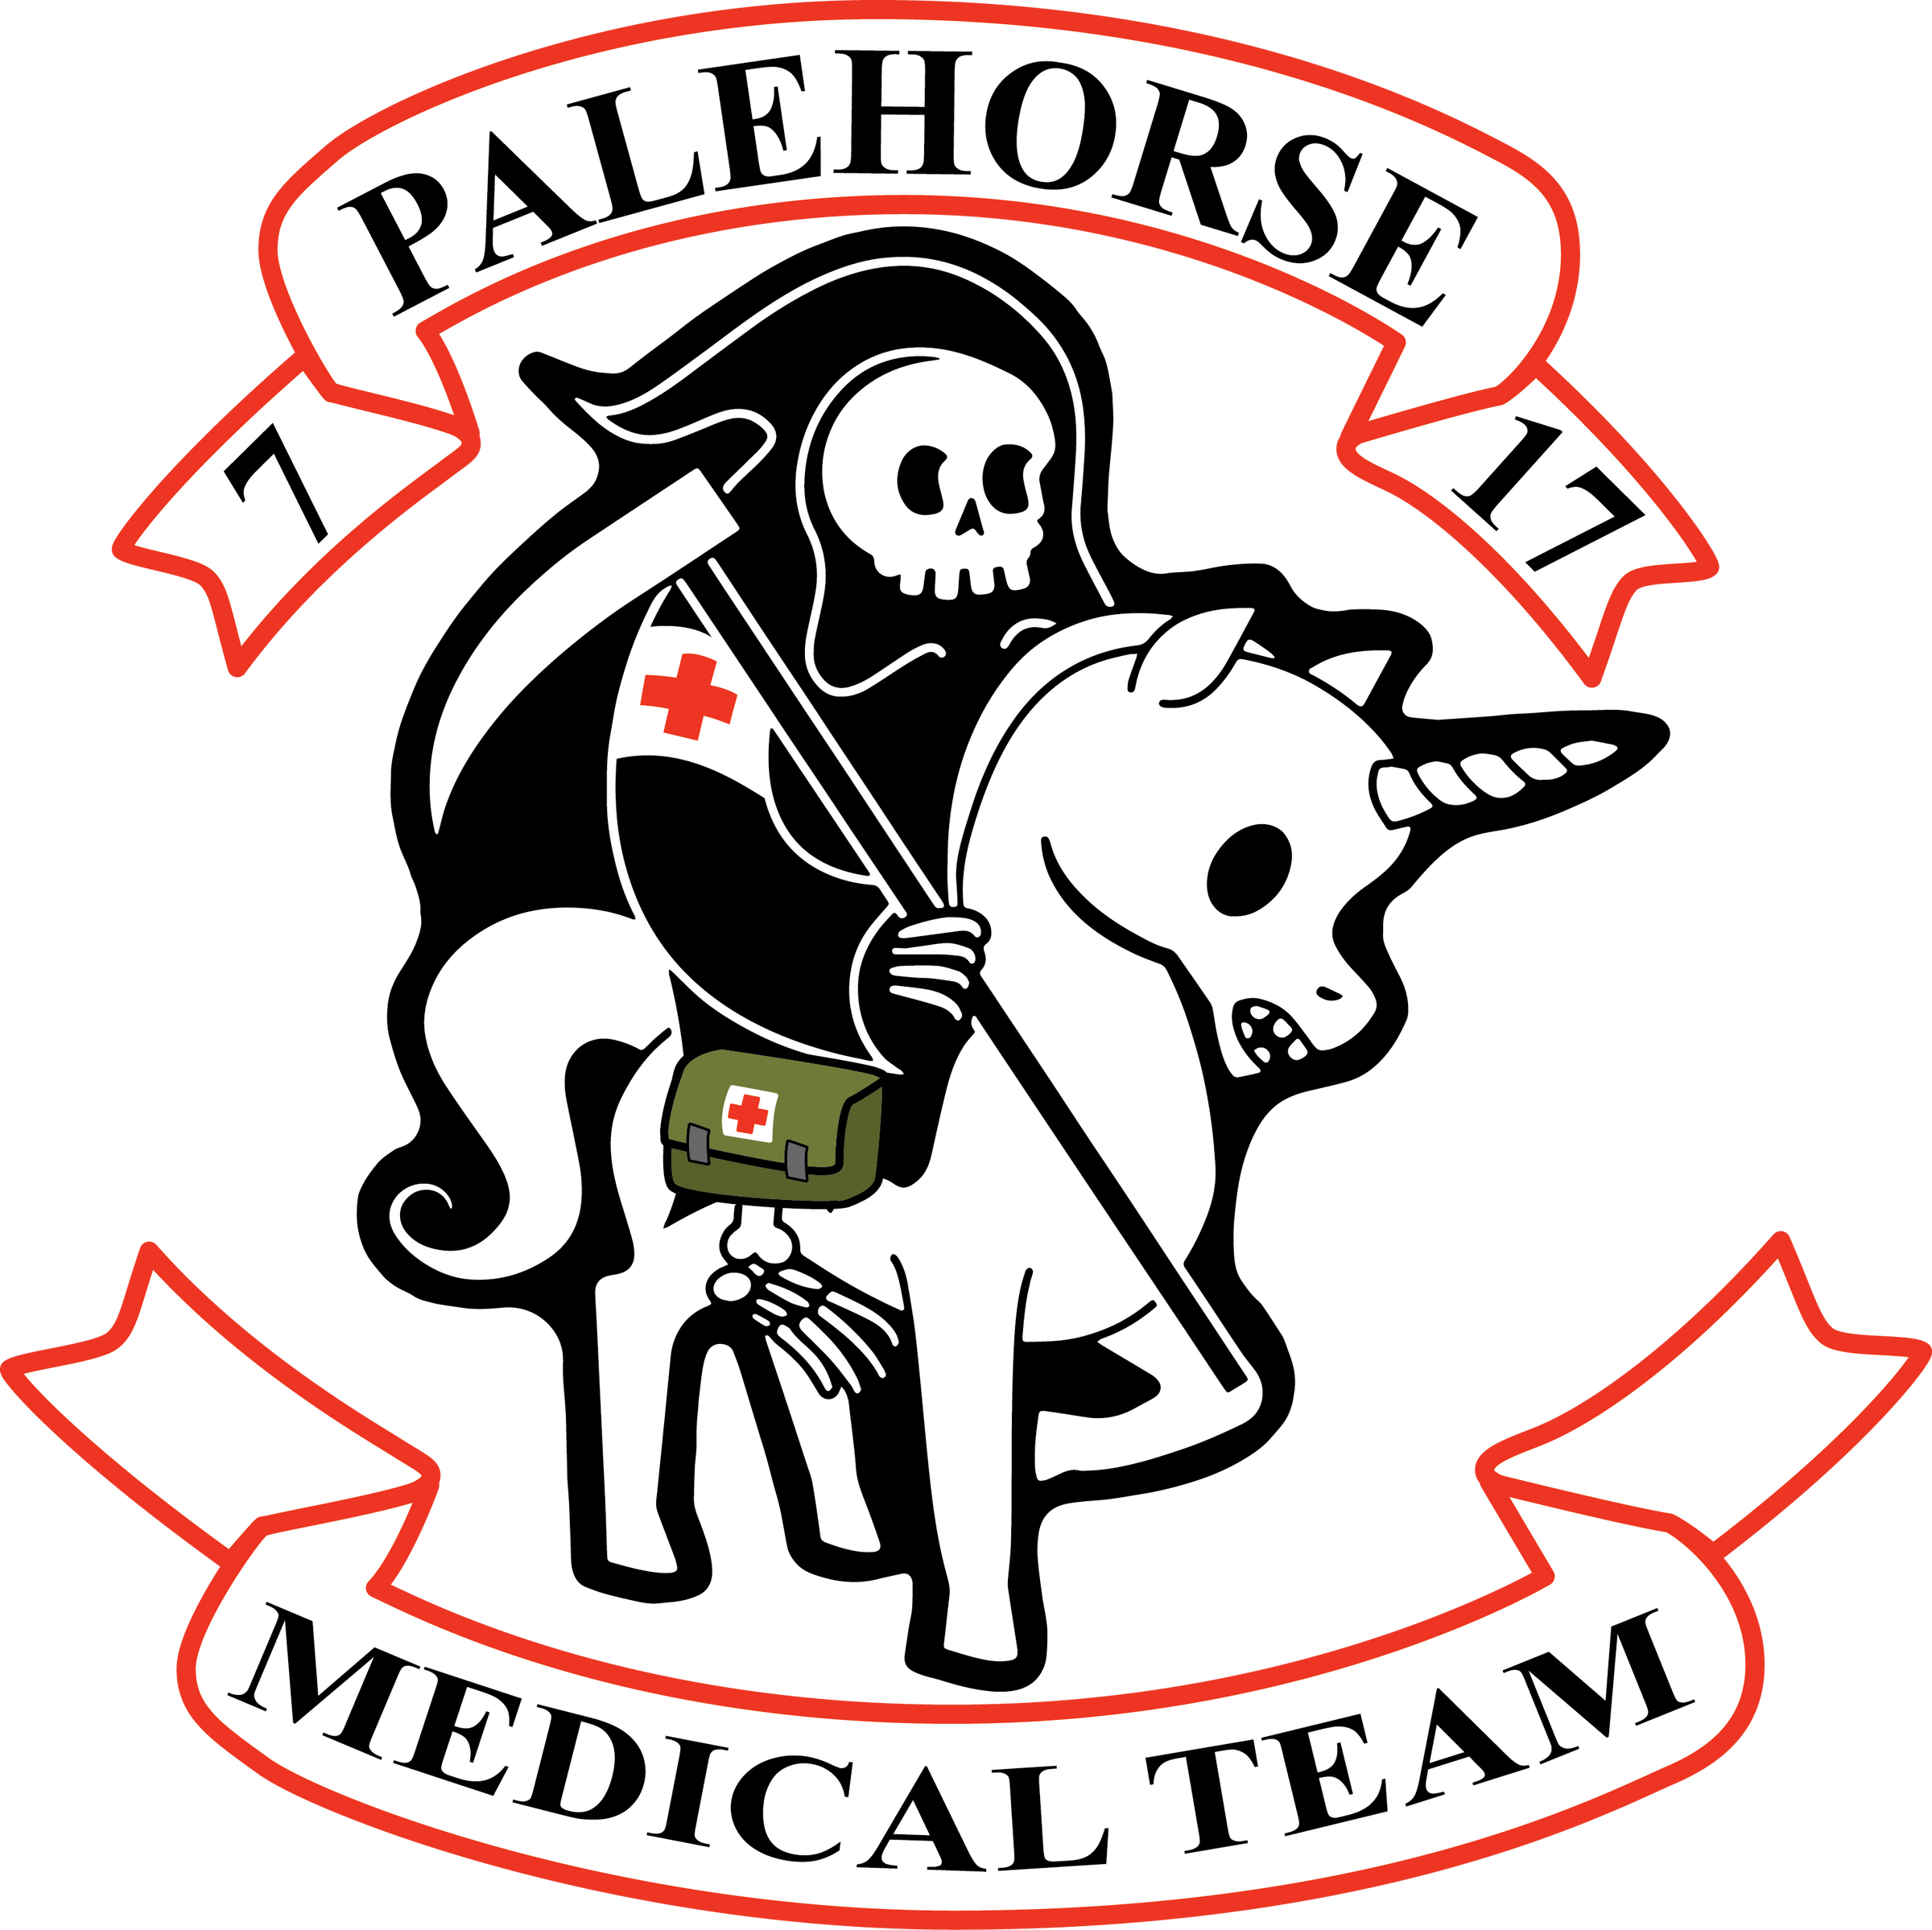 Medical Team, 7-17th ACS "Palehorse"